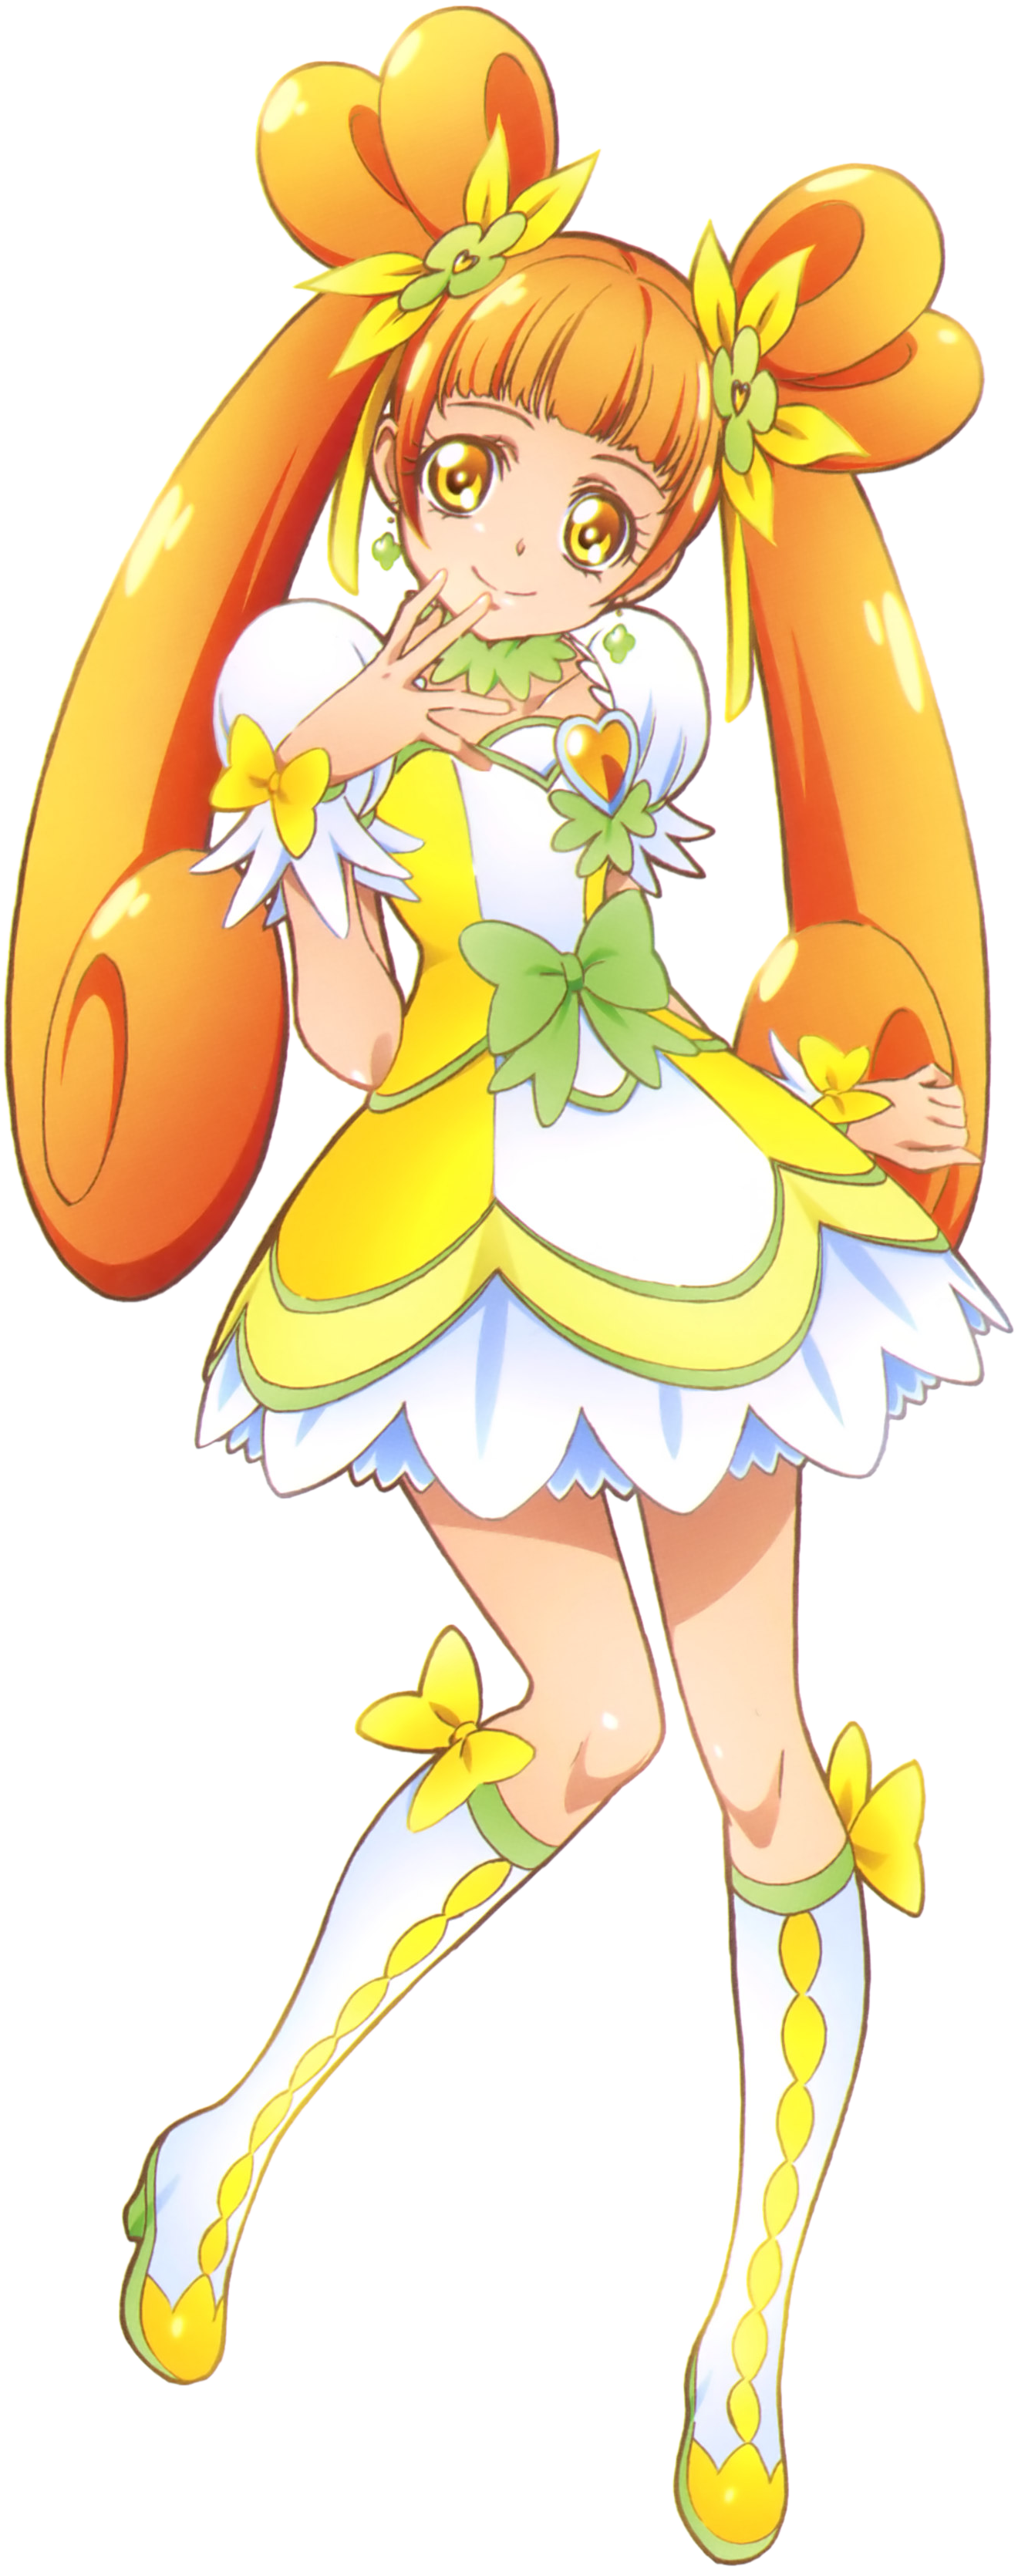 Image Doki Doki Pretty Cure Cure Rosetta Pose4png Magical Girl Mahou Shoujo 魔法少女 Wiki 9156